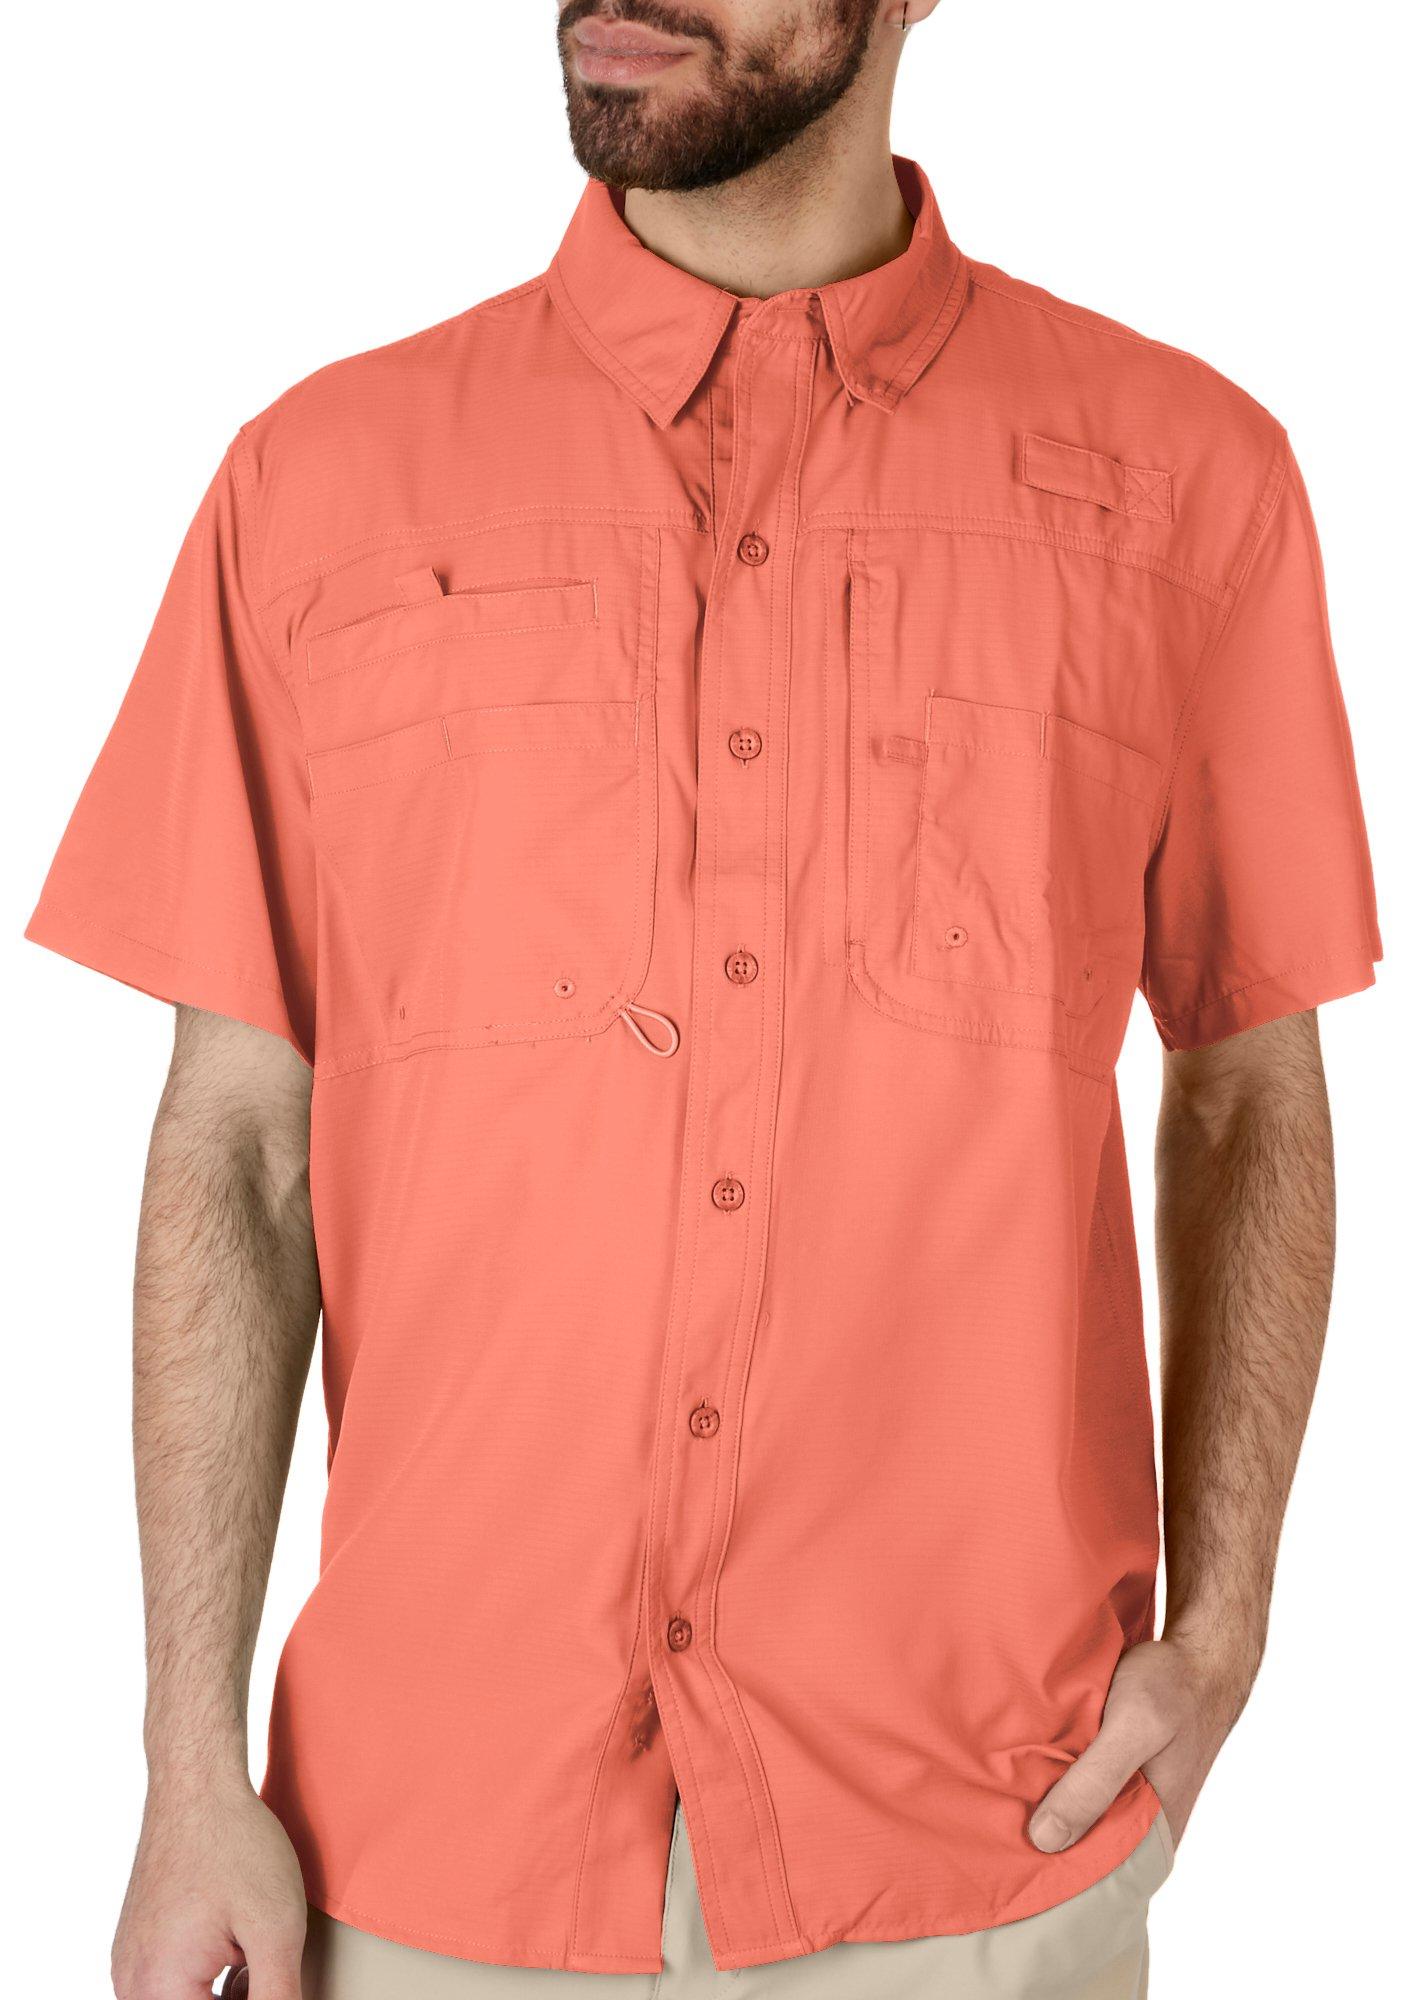 Reel Legends Clothing Fishing Shirt XL  Fishing shirts, Clothes design,  Casual button down shirts